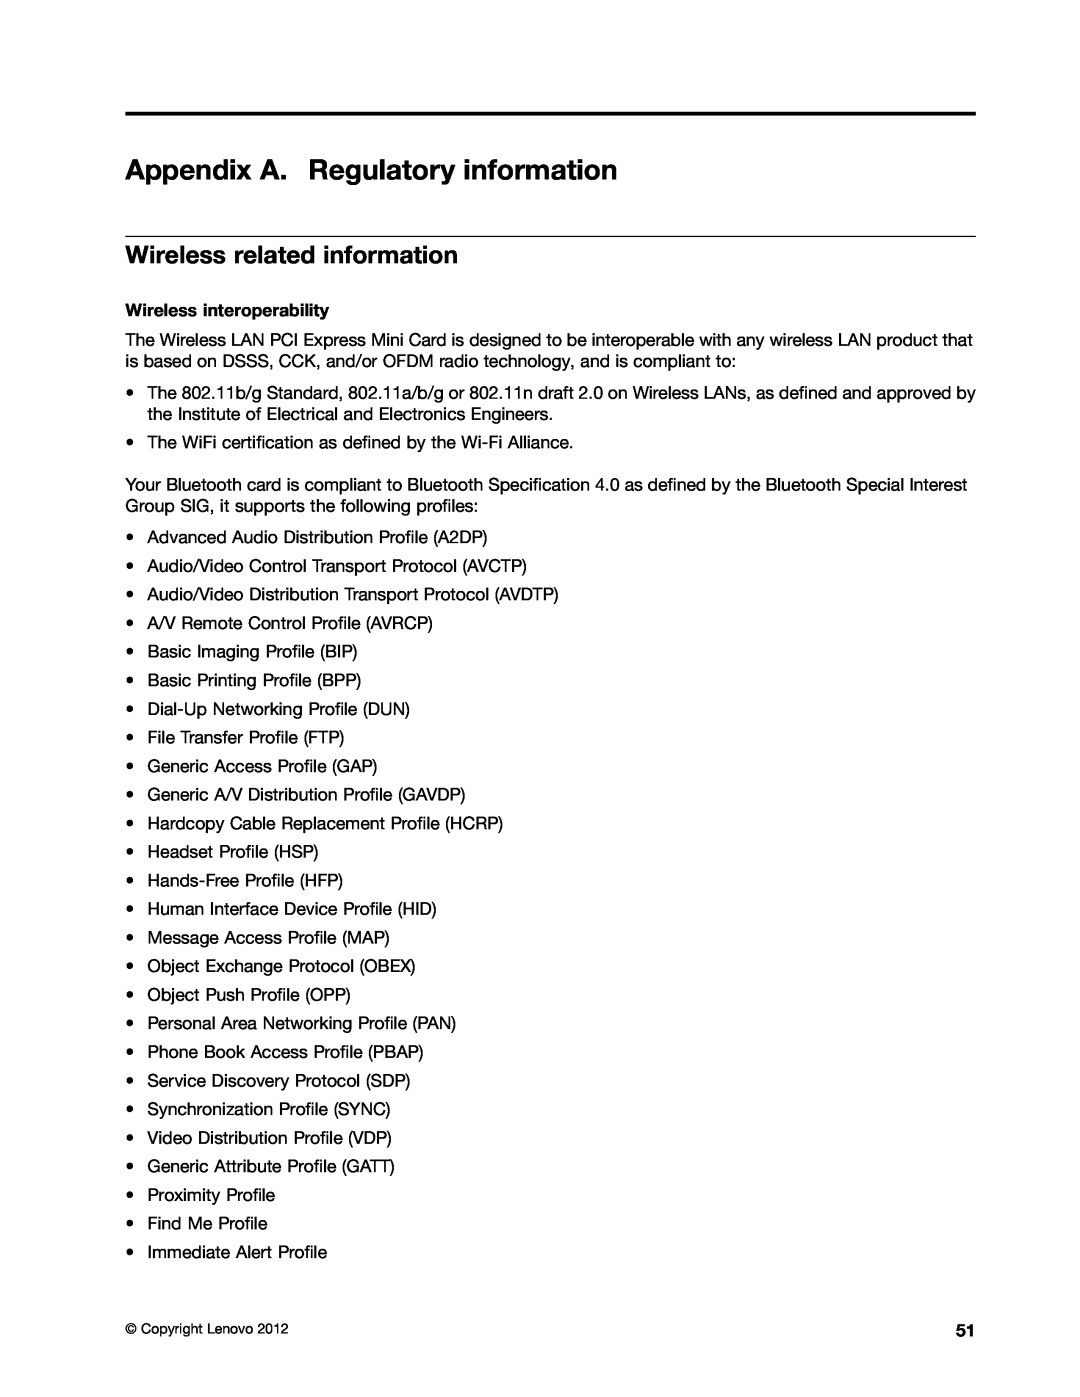 Lenovo B490, 59366616, B590 Appendix A. Regulatory information, Wireless related information, Wireless interoperability 